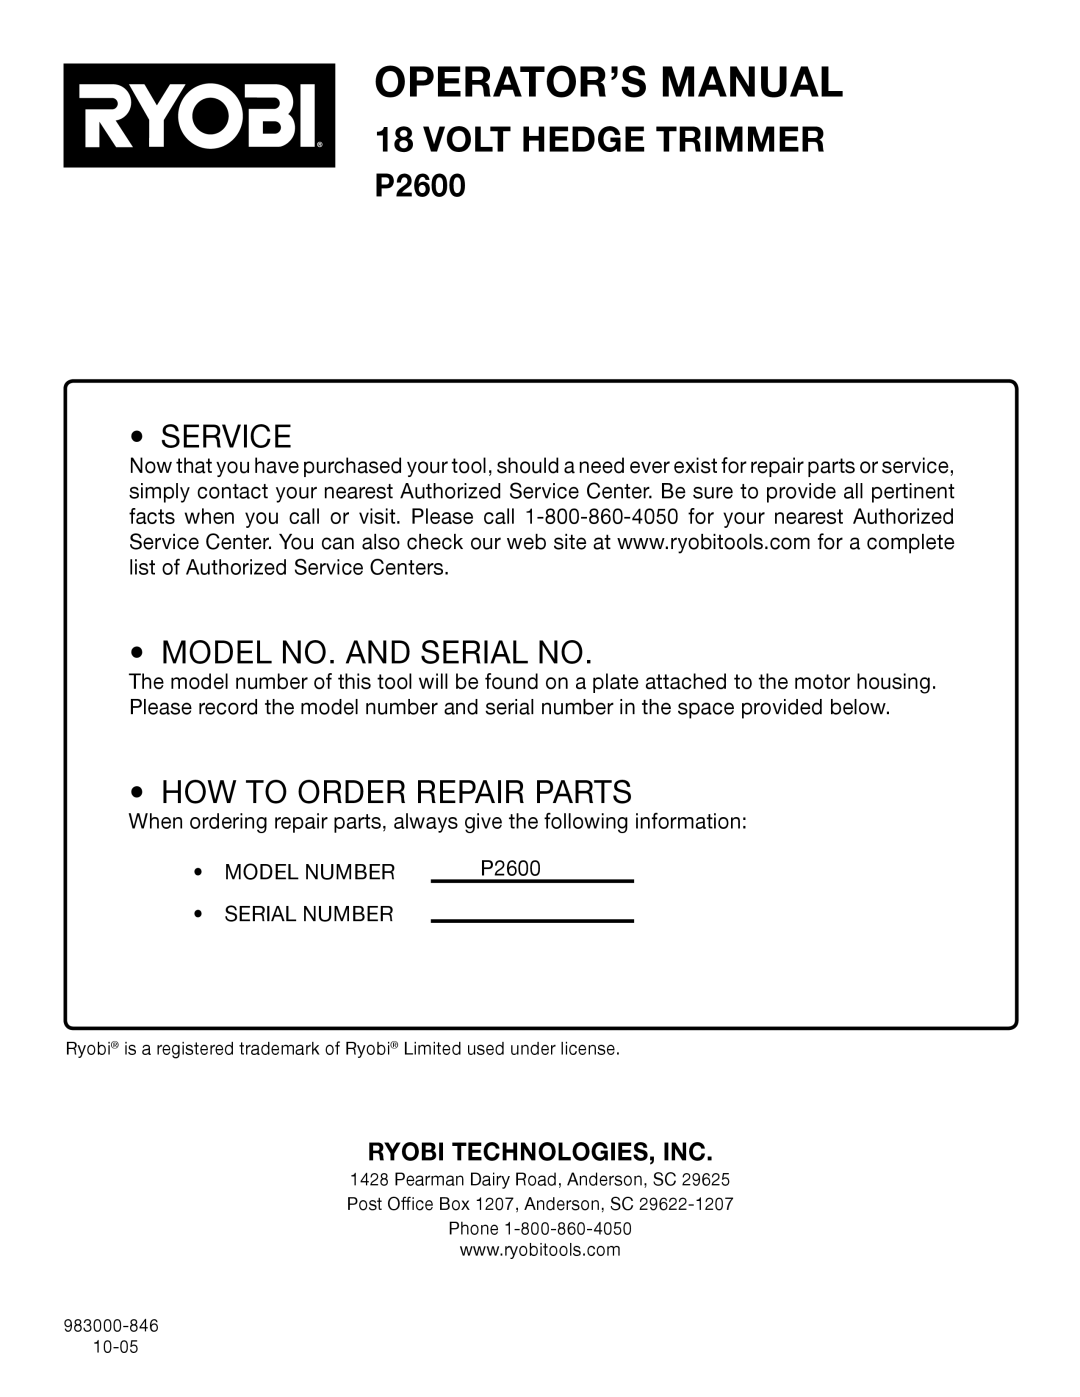 Ryobi Outdoor P2600 manual Ryobi Technologies, Inc, Operator’S Manual, Volt Hedge Trimmer, Service, Model No. And Serial No 